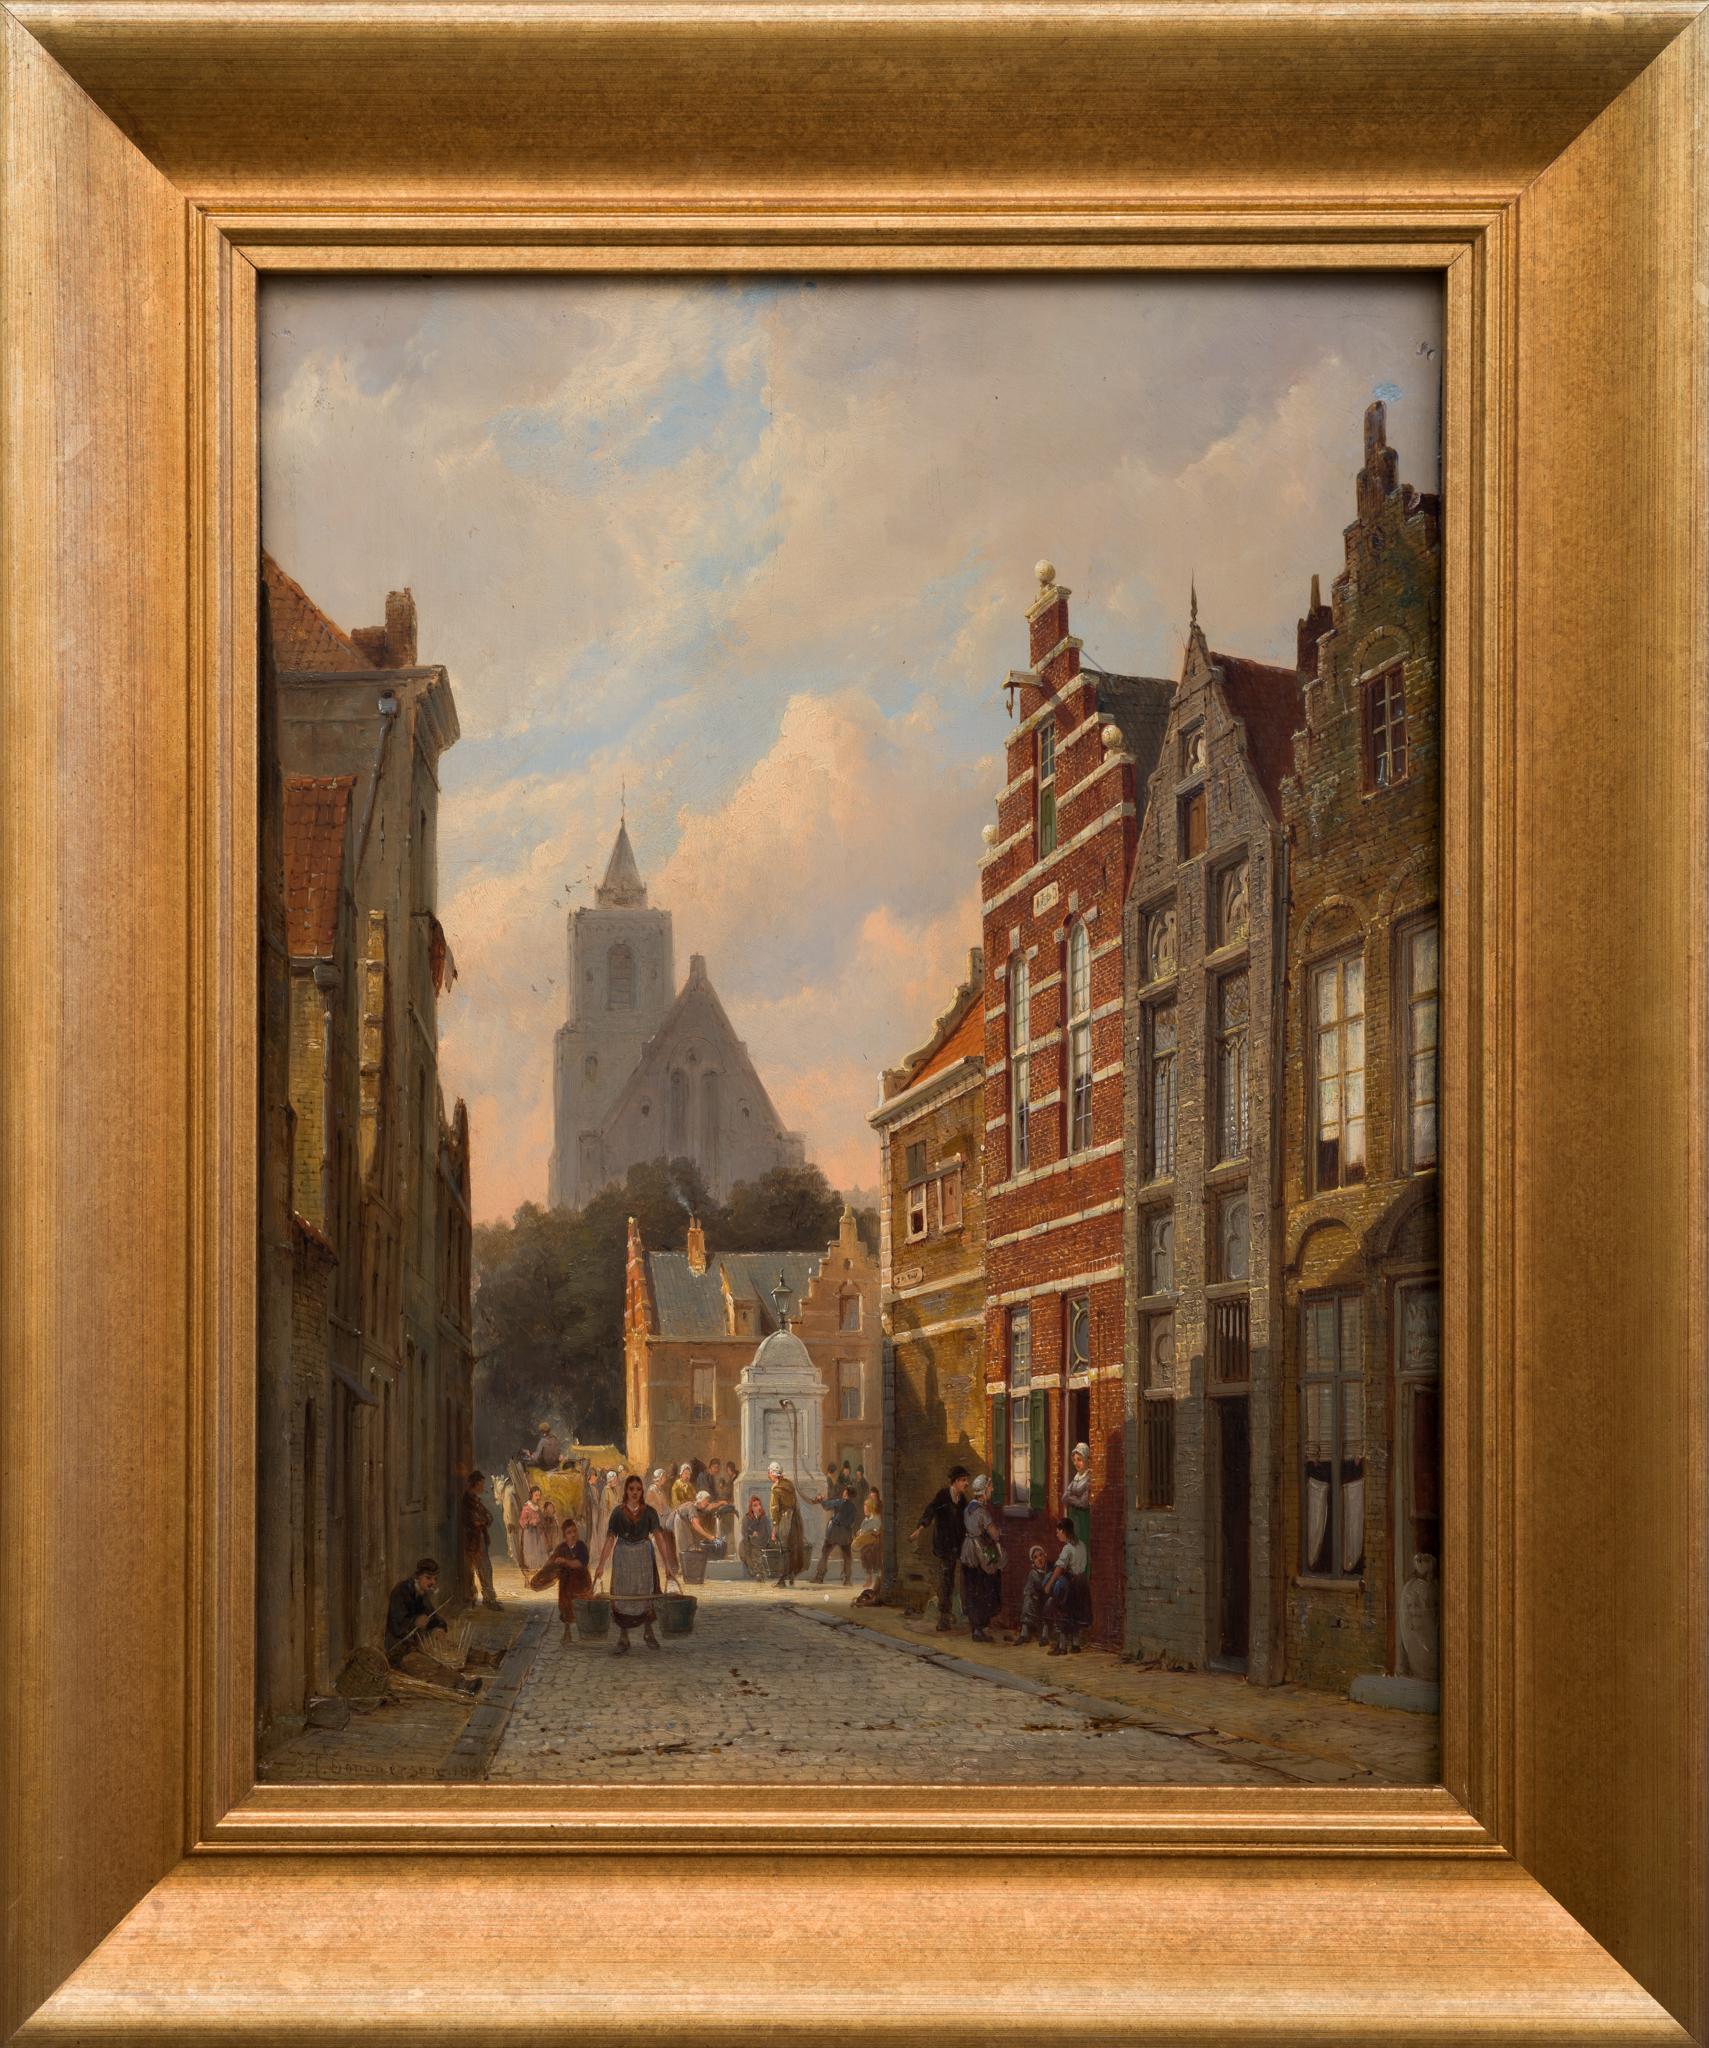 Dommersen, Pieter Cornelis Landscape Painting - Utrecht, A Day on St. Gertrude's Place (1880) by Pieter Cornelis Dommershuijzen